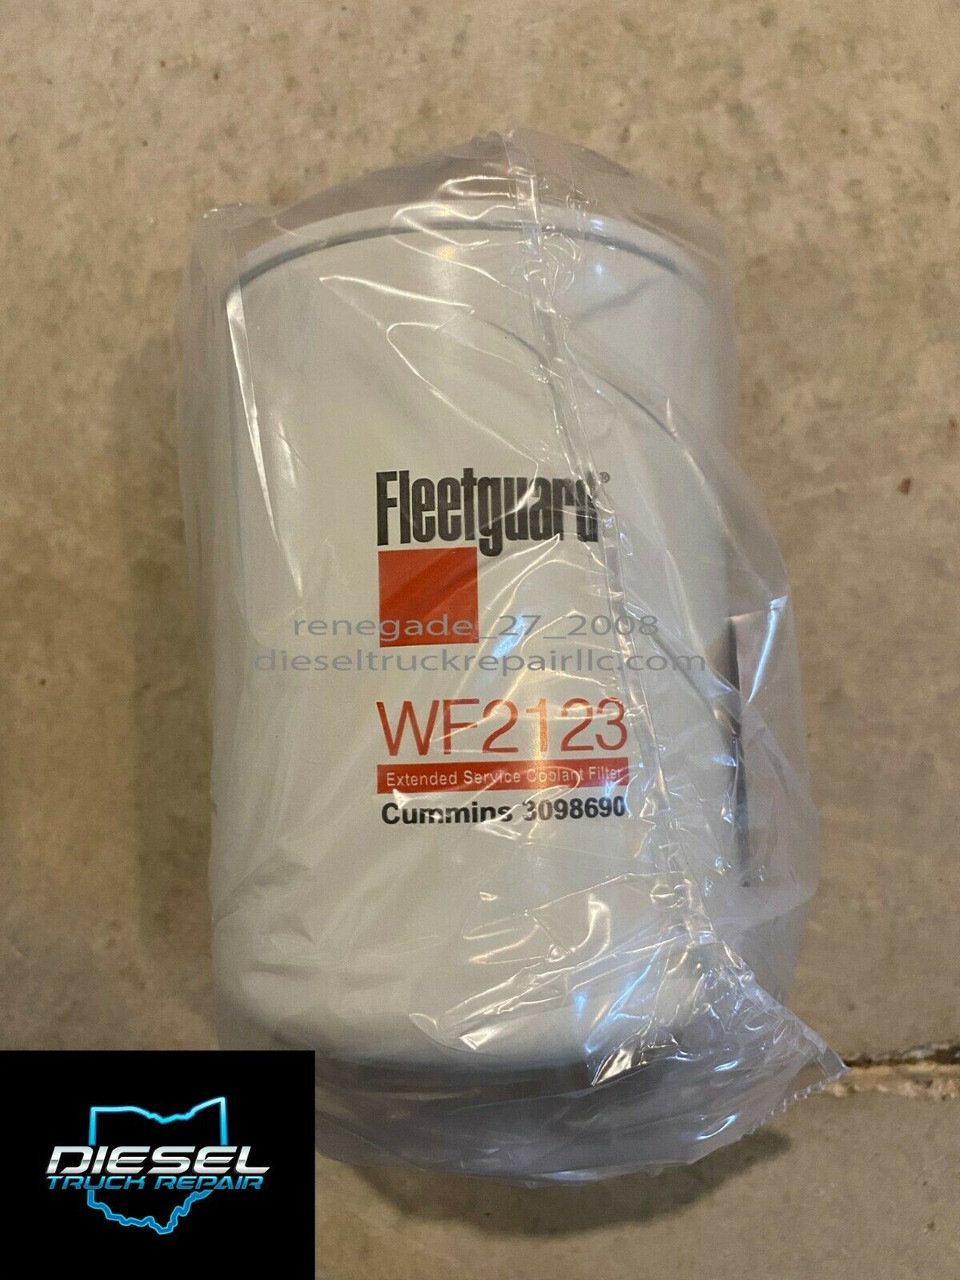 New Fleetguard Coolant Filter WF2123 3932120 for Cummins N14 & M11 Extended Life